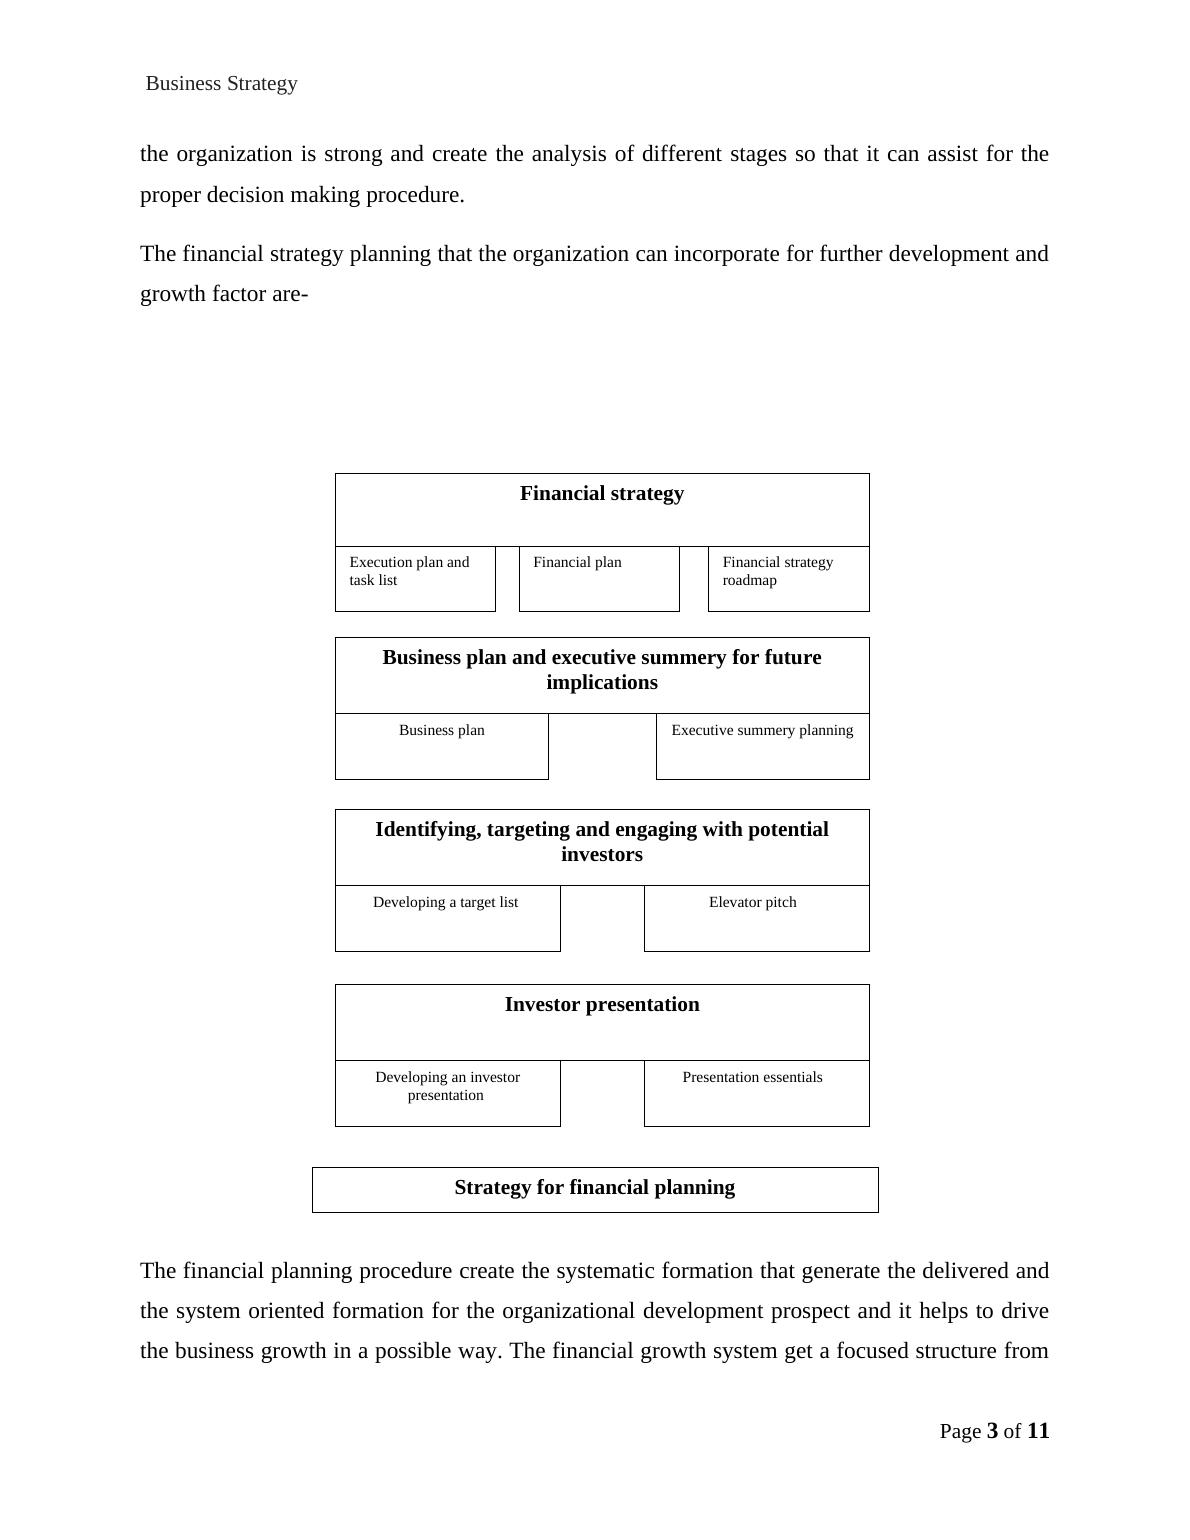 Strategic Management for Competitive Advantage - Report_4